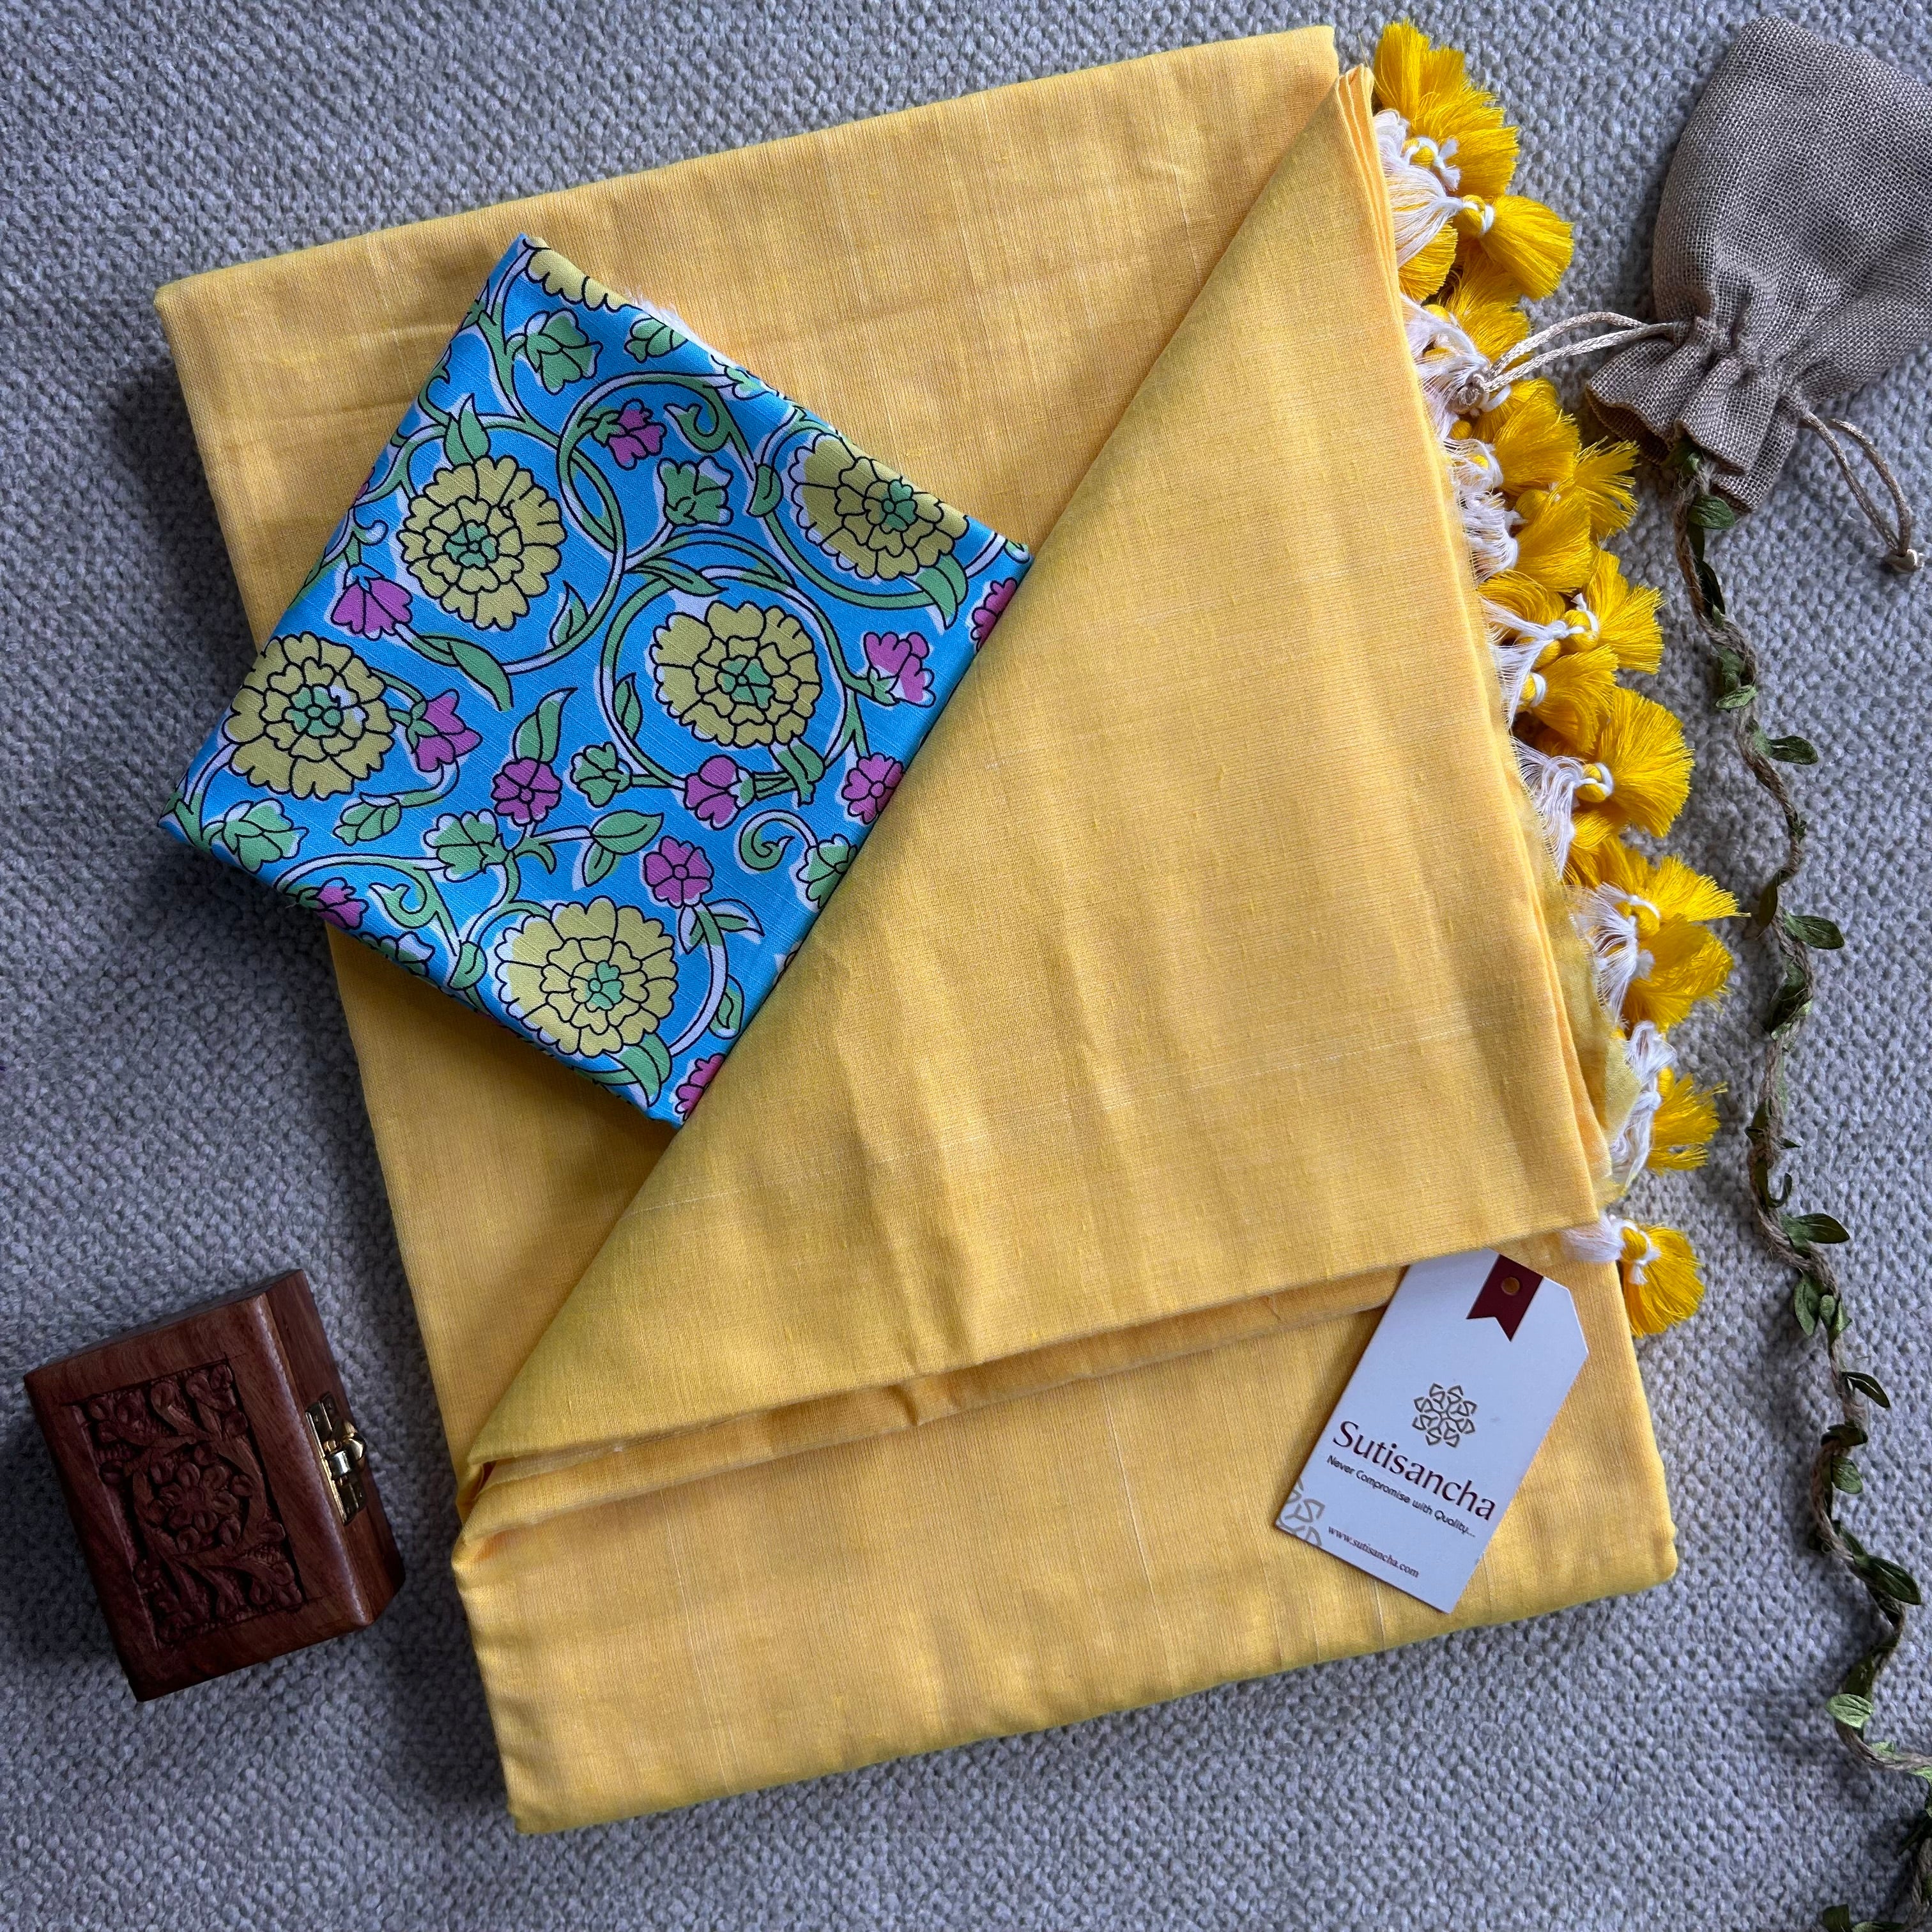 Sutisancha Yellow Handloom Cotton Saree & Sky Flowers Blouse